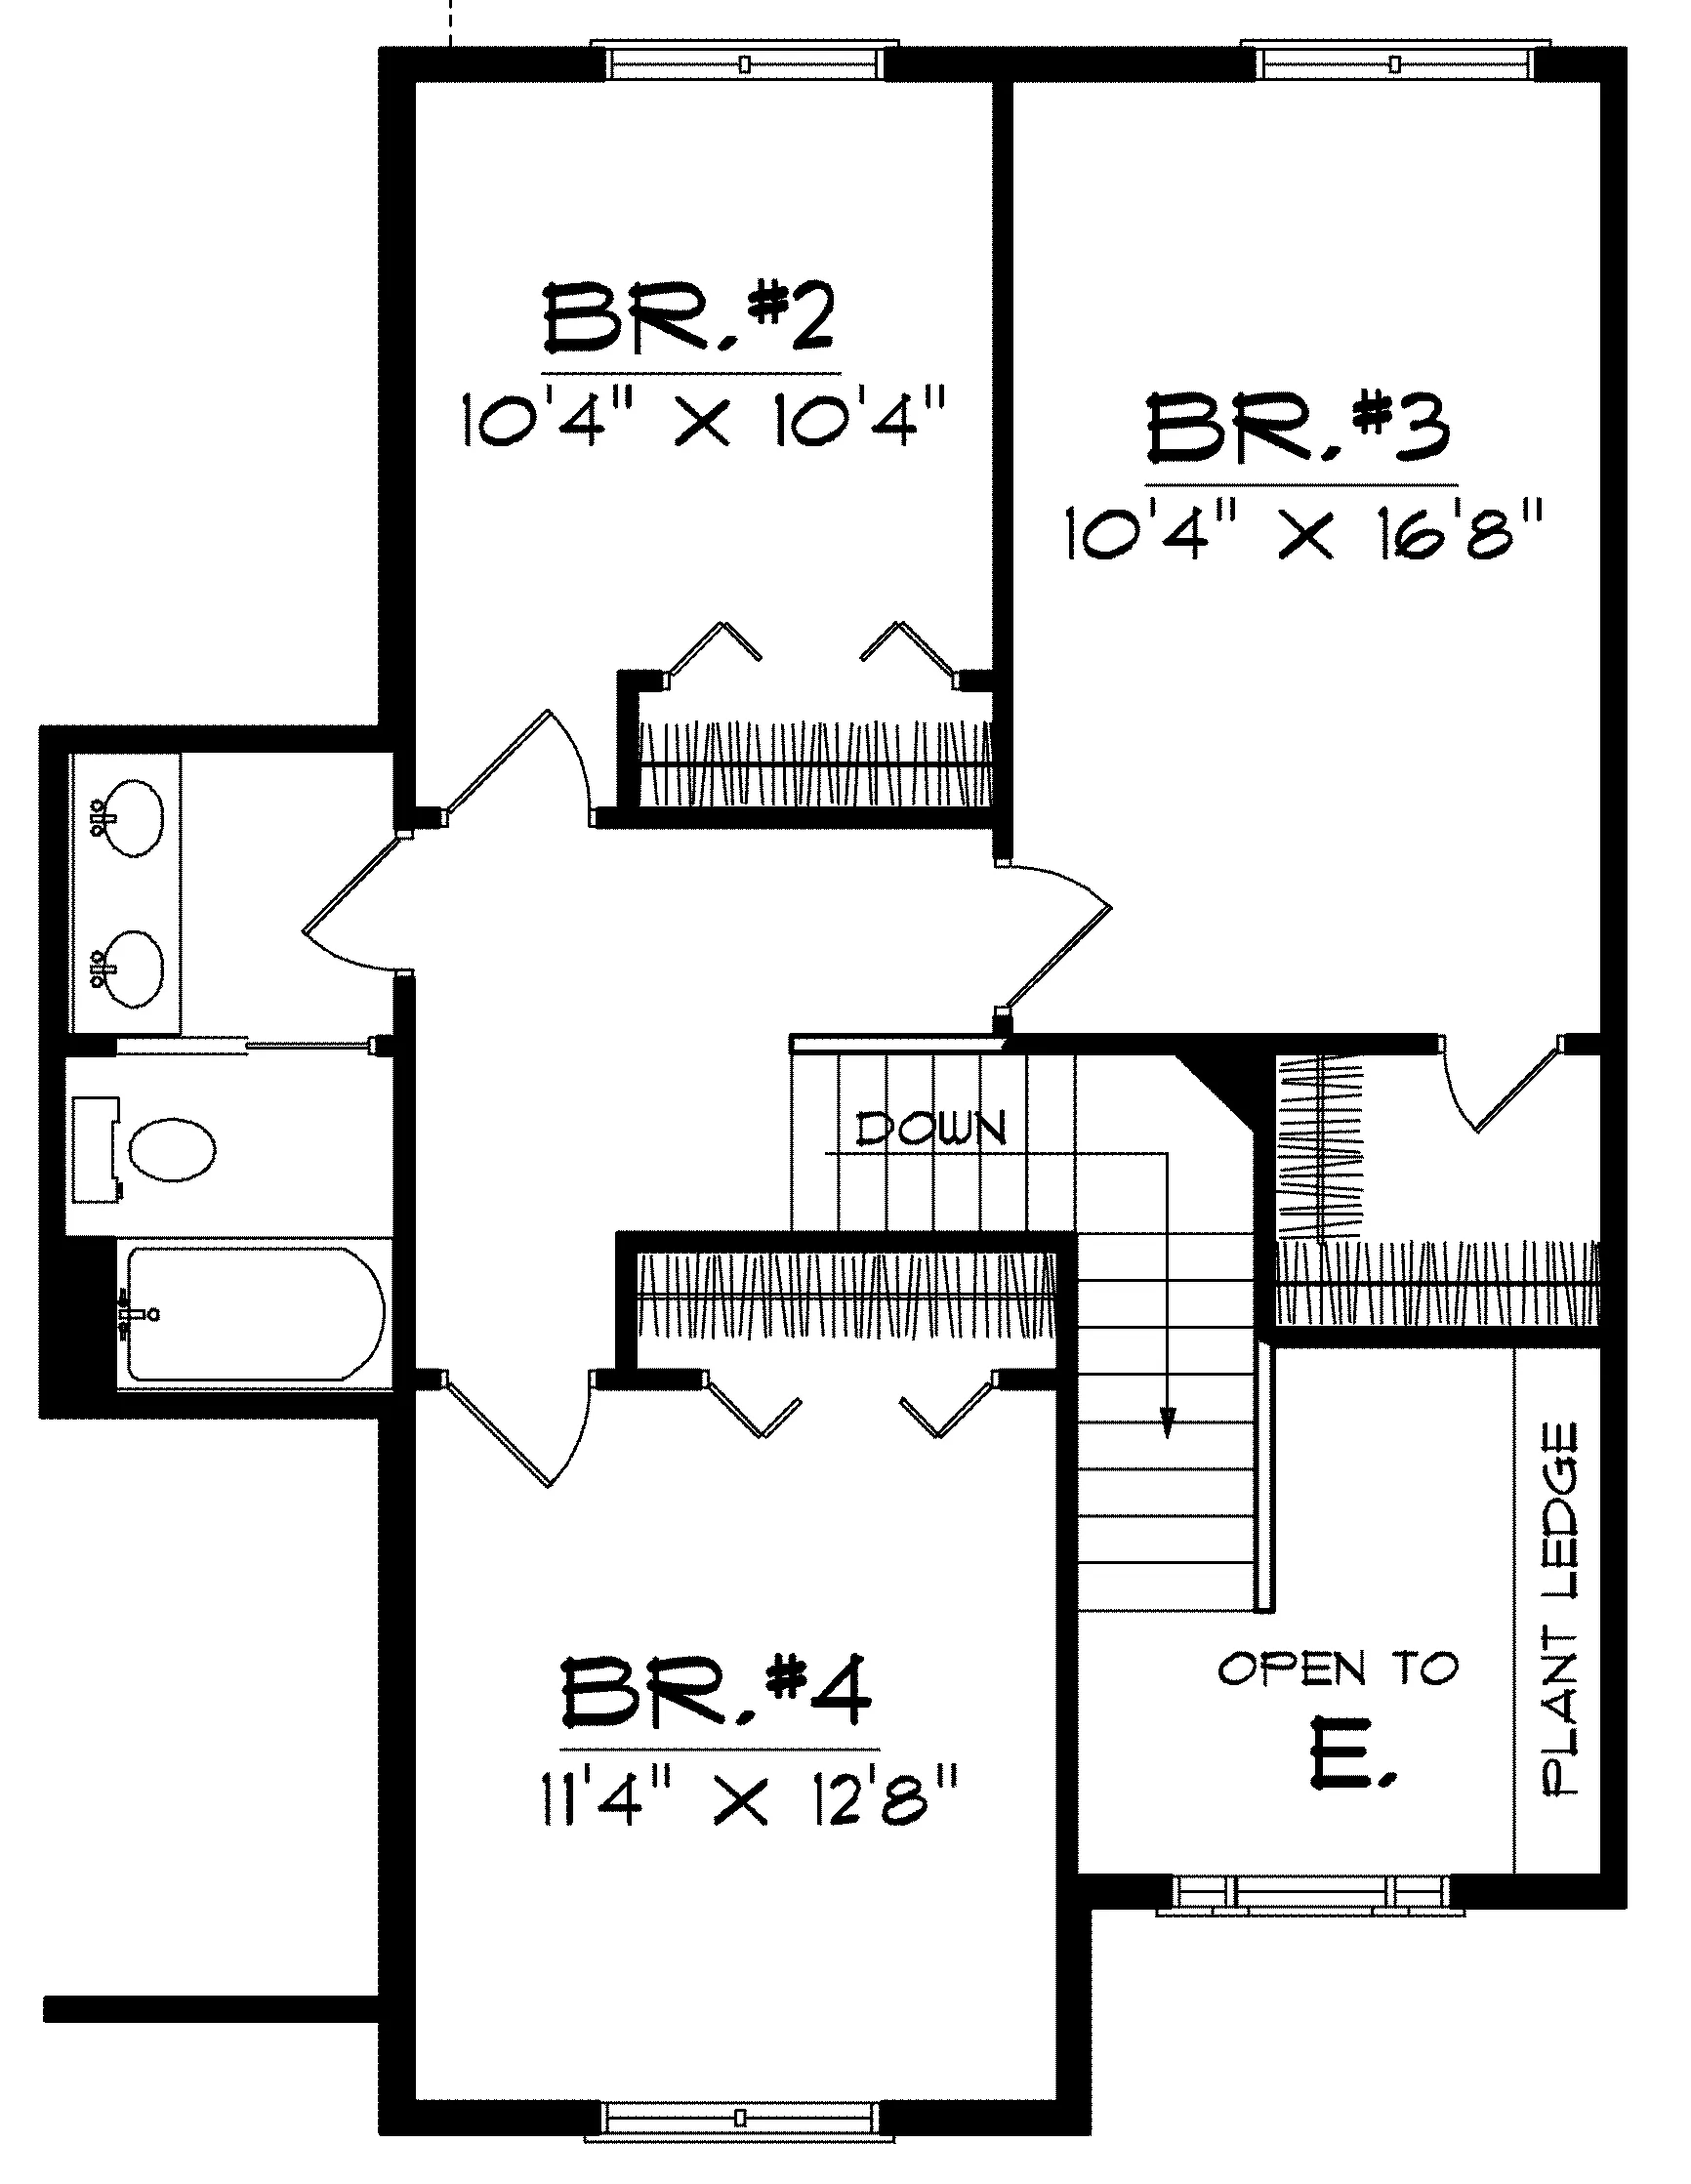 Sunbelt House Plan Second Floor - Deluca Hill Sunbelt Home 051D-0166 - Search House Plans and More